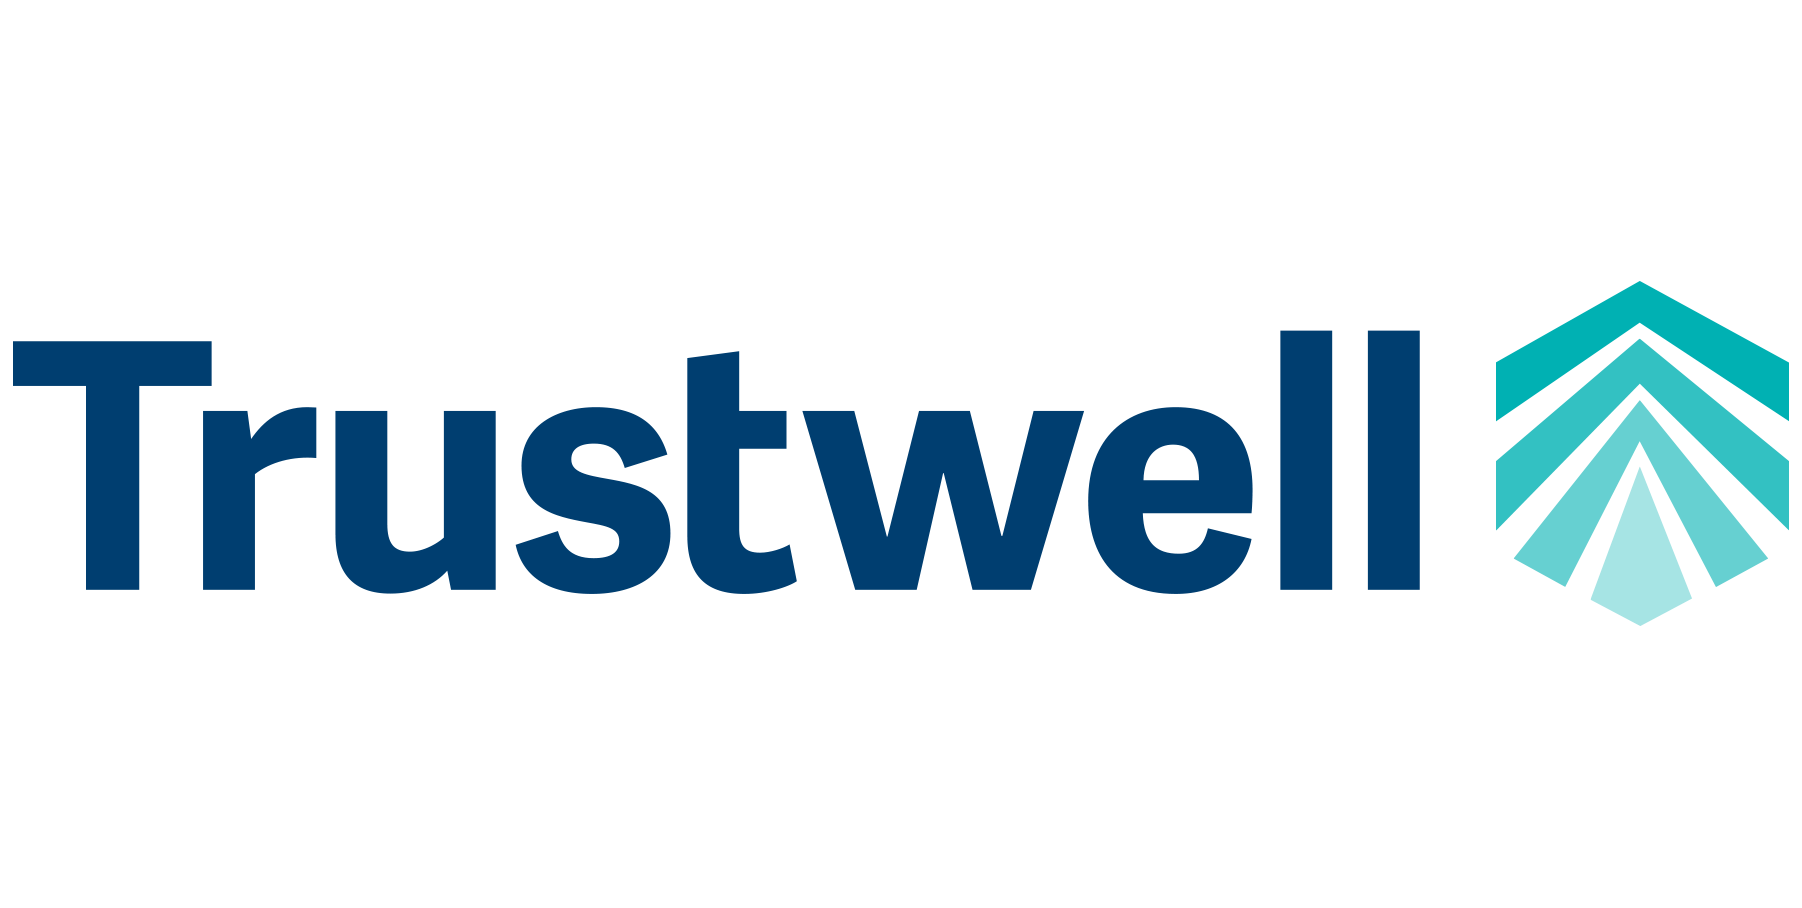 Trustwell logo